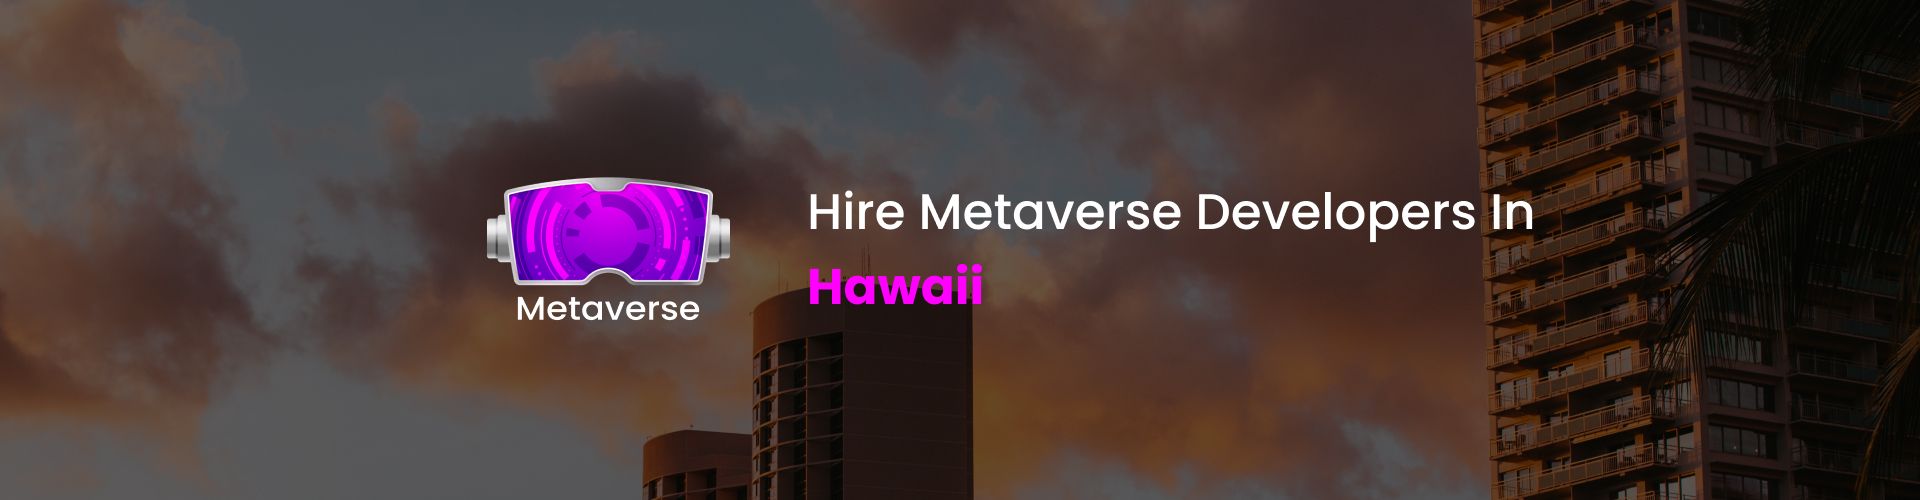 hire metaverse developers in hawaii